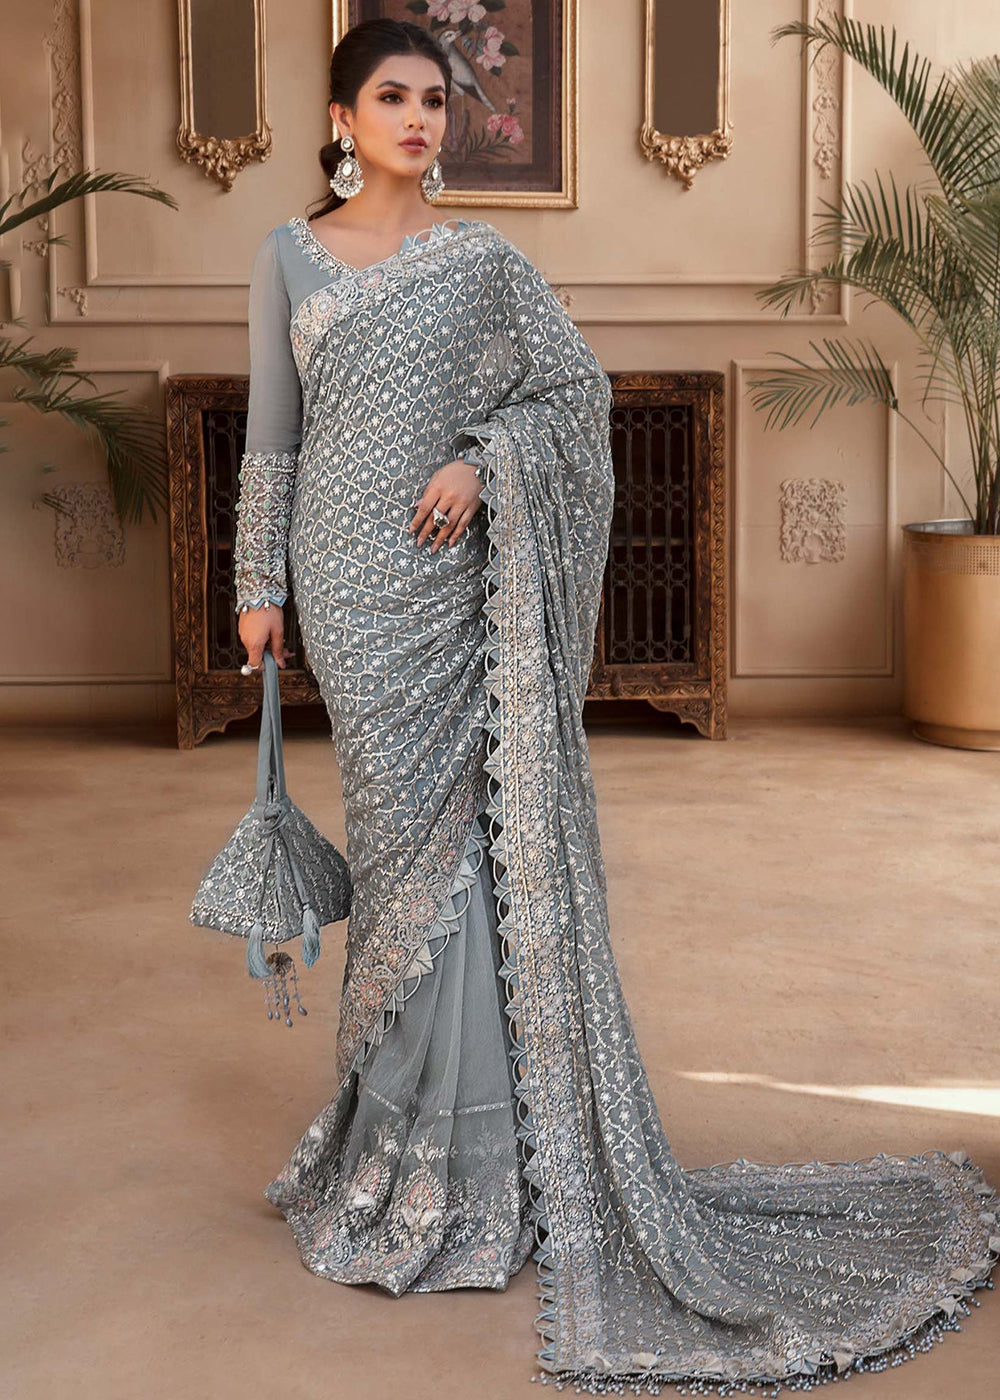 Stunning Party Wear Saree Designs, Beautiful Wedding Wear Sarees  Collections